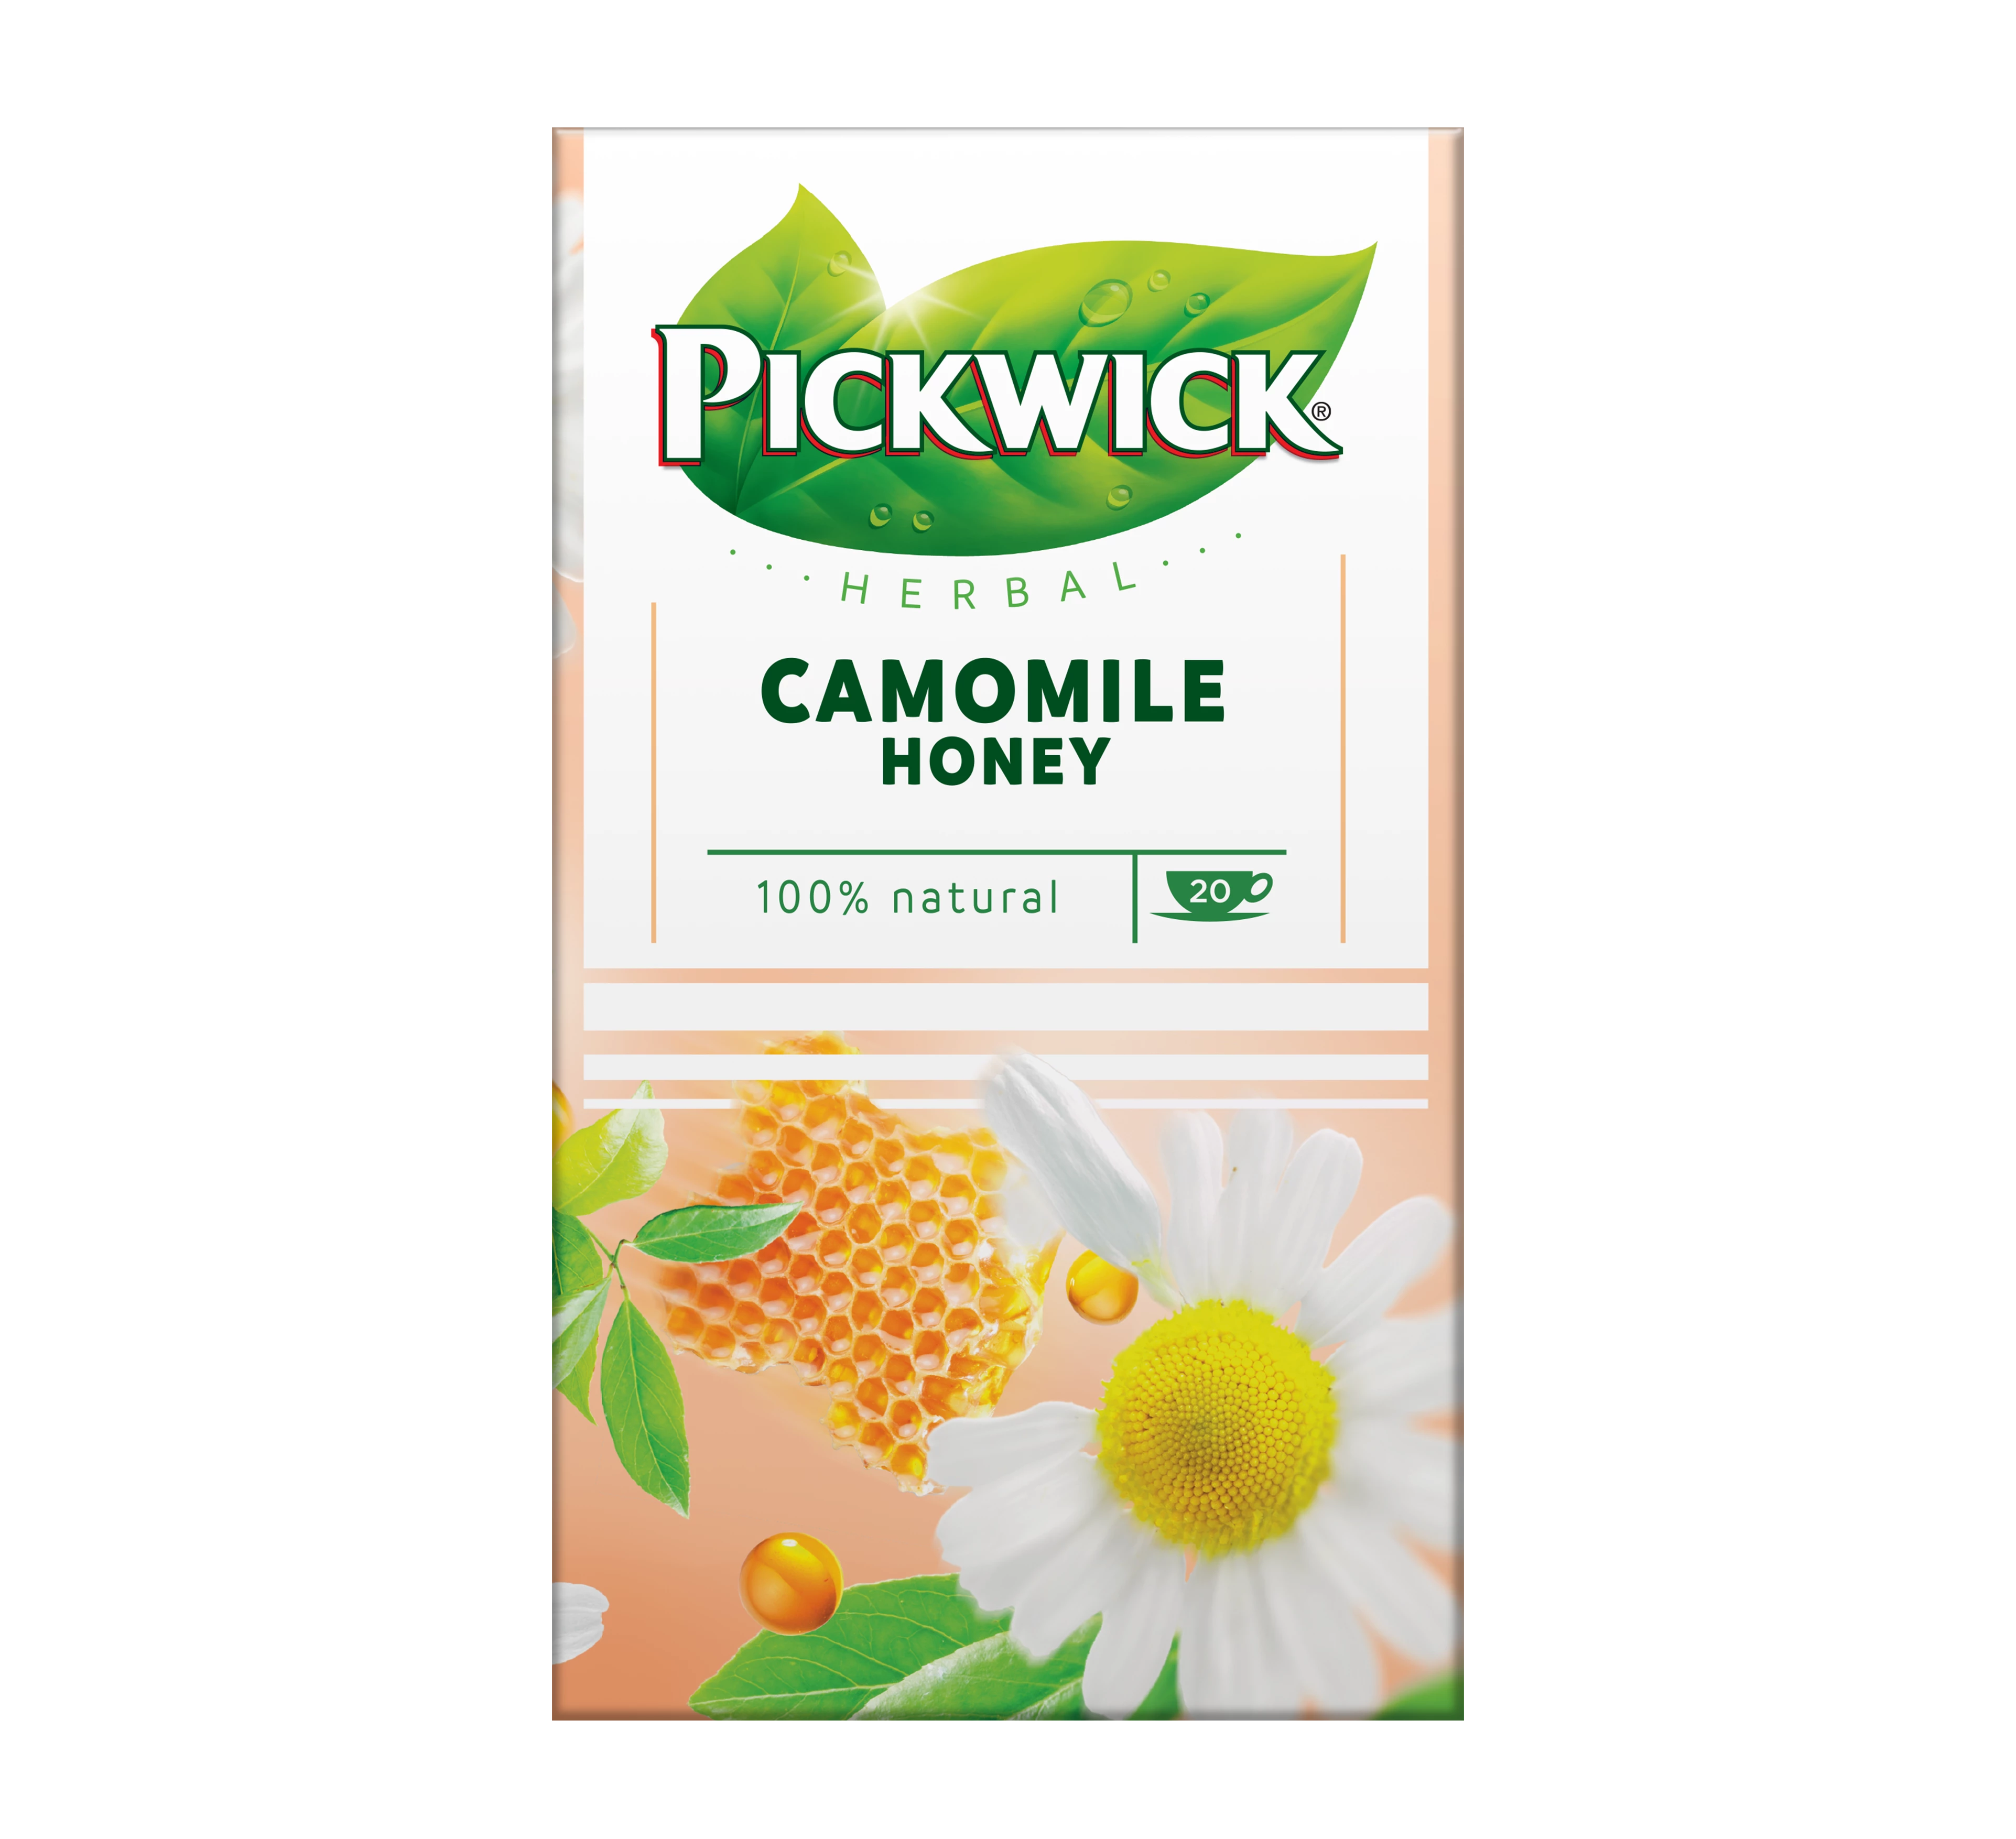 Pickwick herbal camomile honey visual packshot 